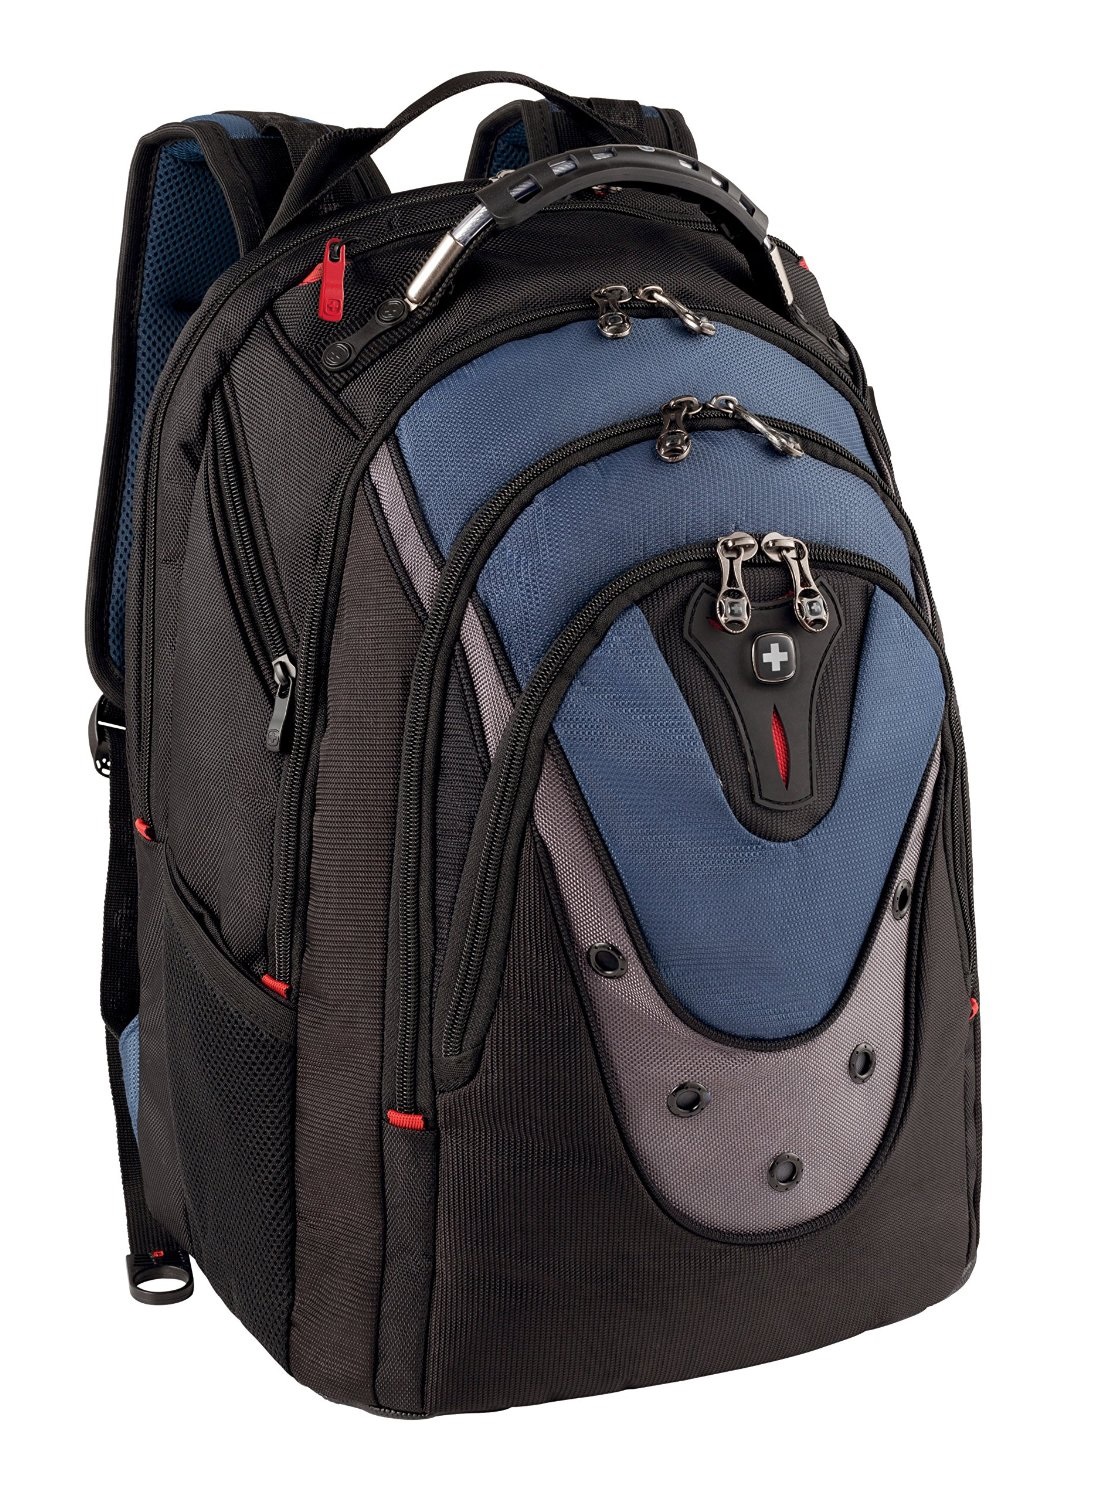 Swissgear Ibex 17-inch Laptop Backpack - Black/Blue - GA-7316